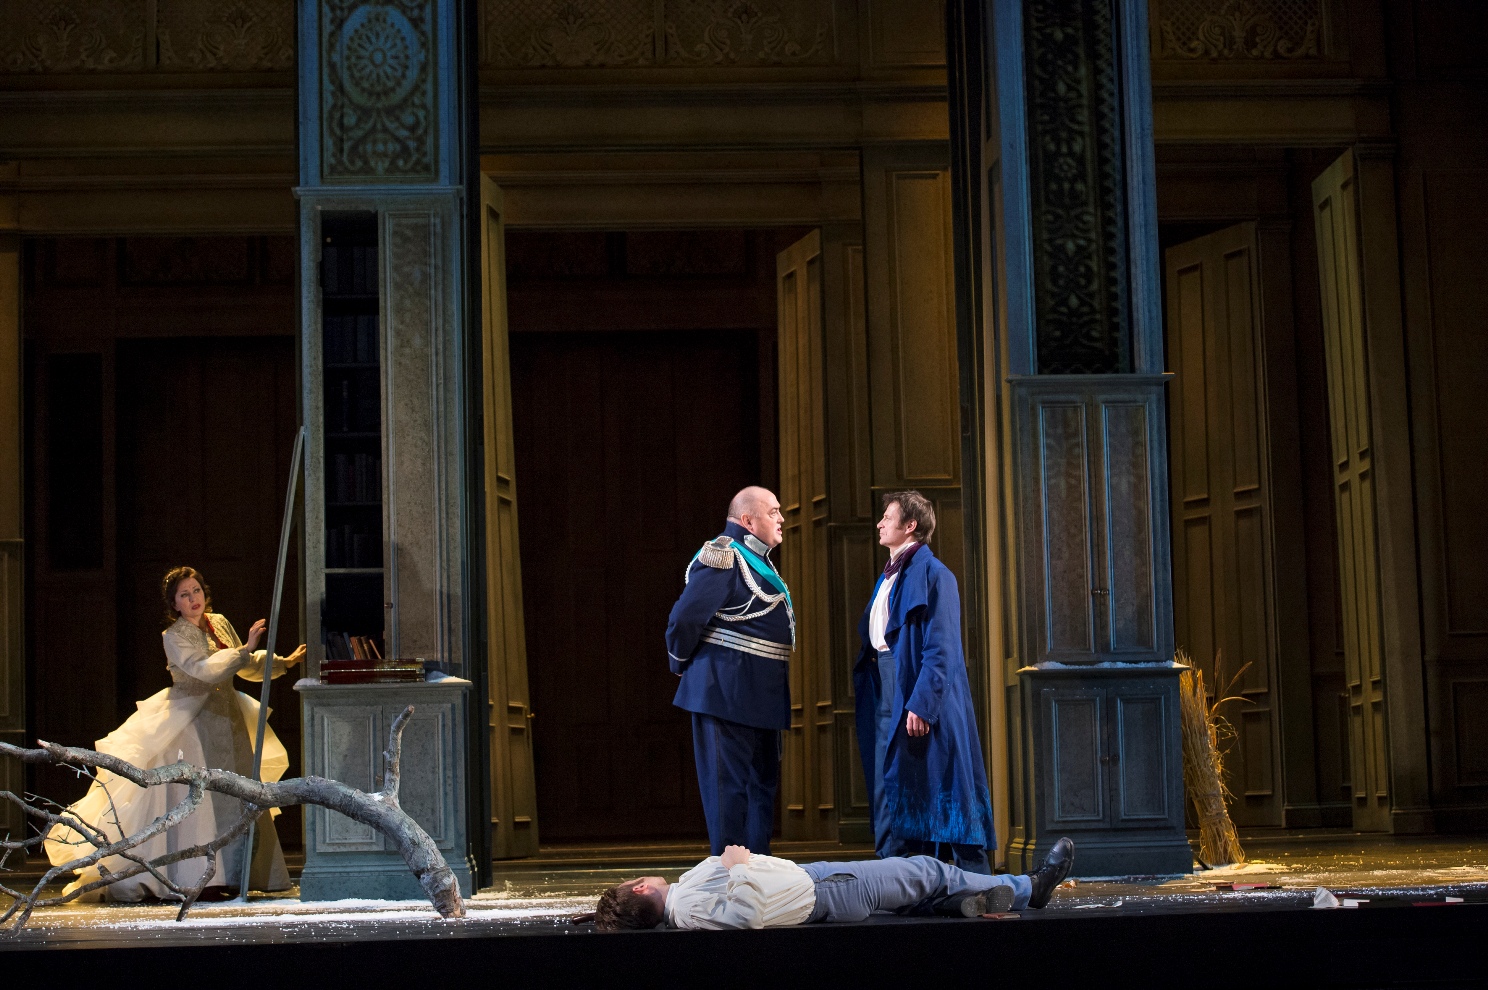 Scene from the final scene of the Royal Opera Eugene Onegin